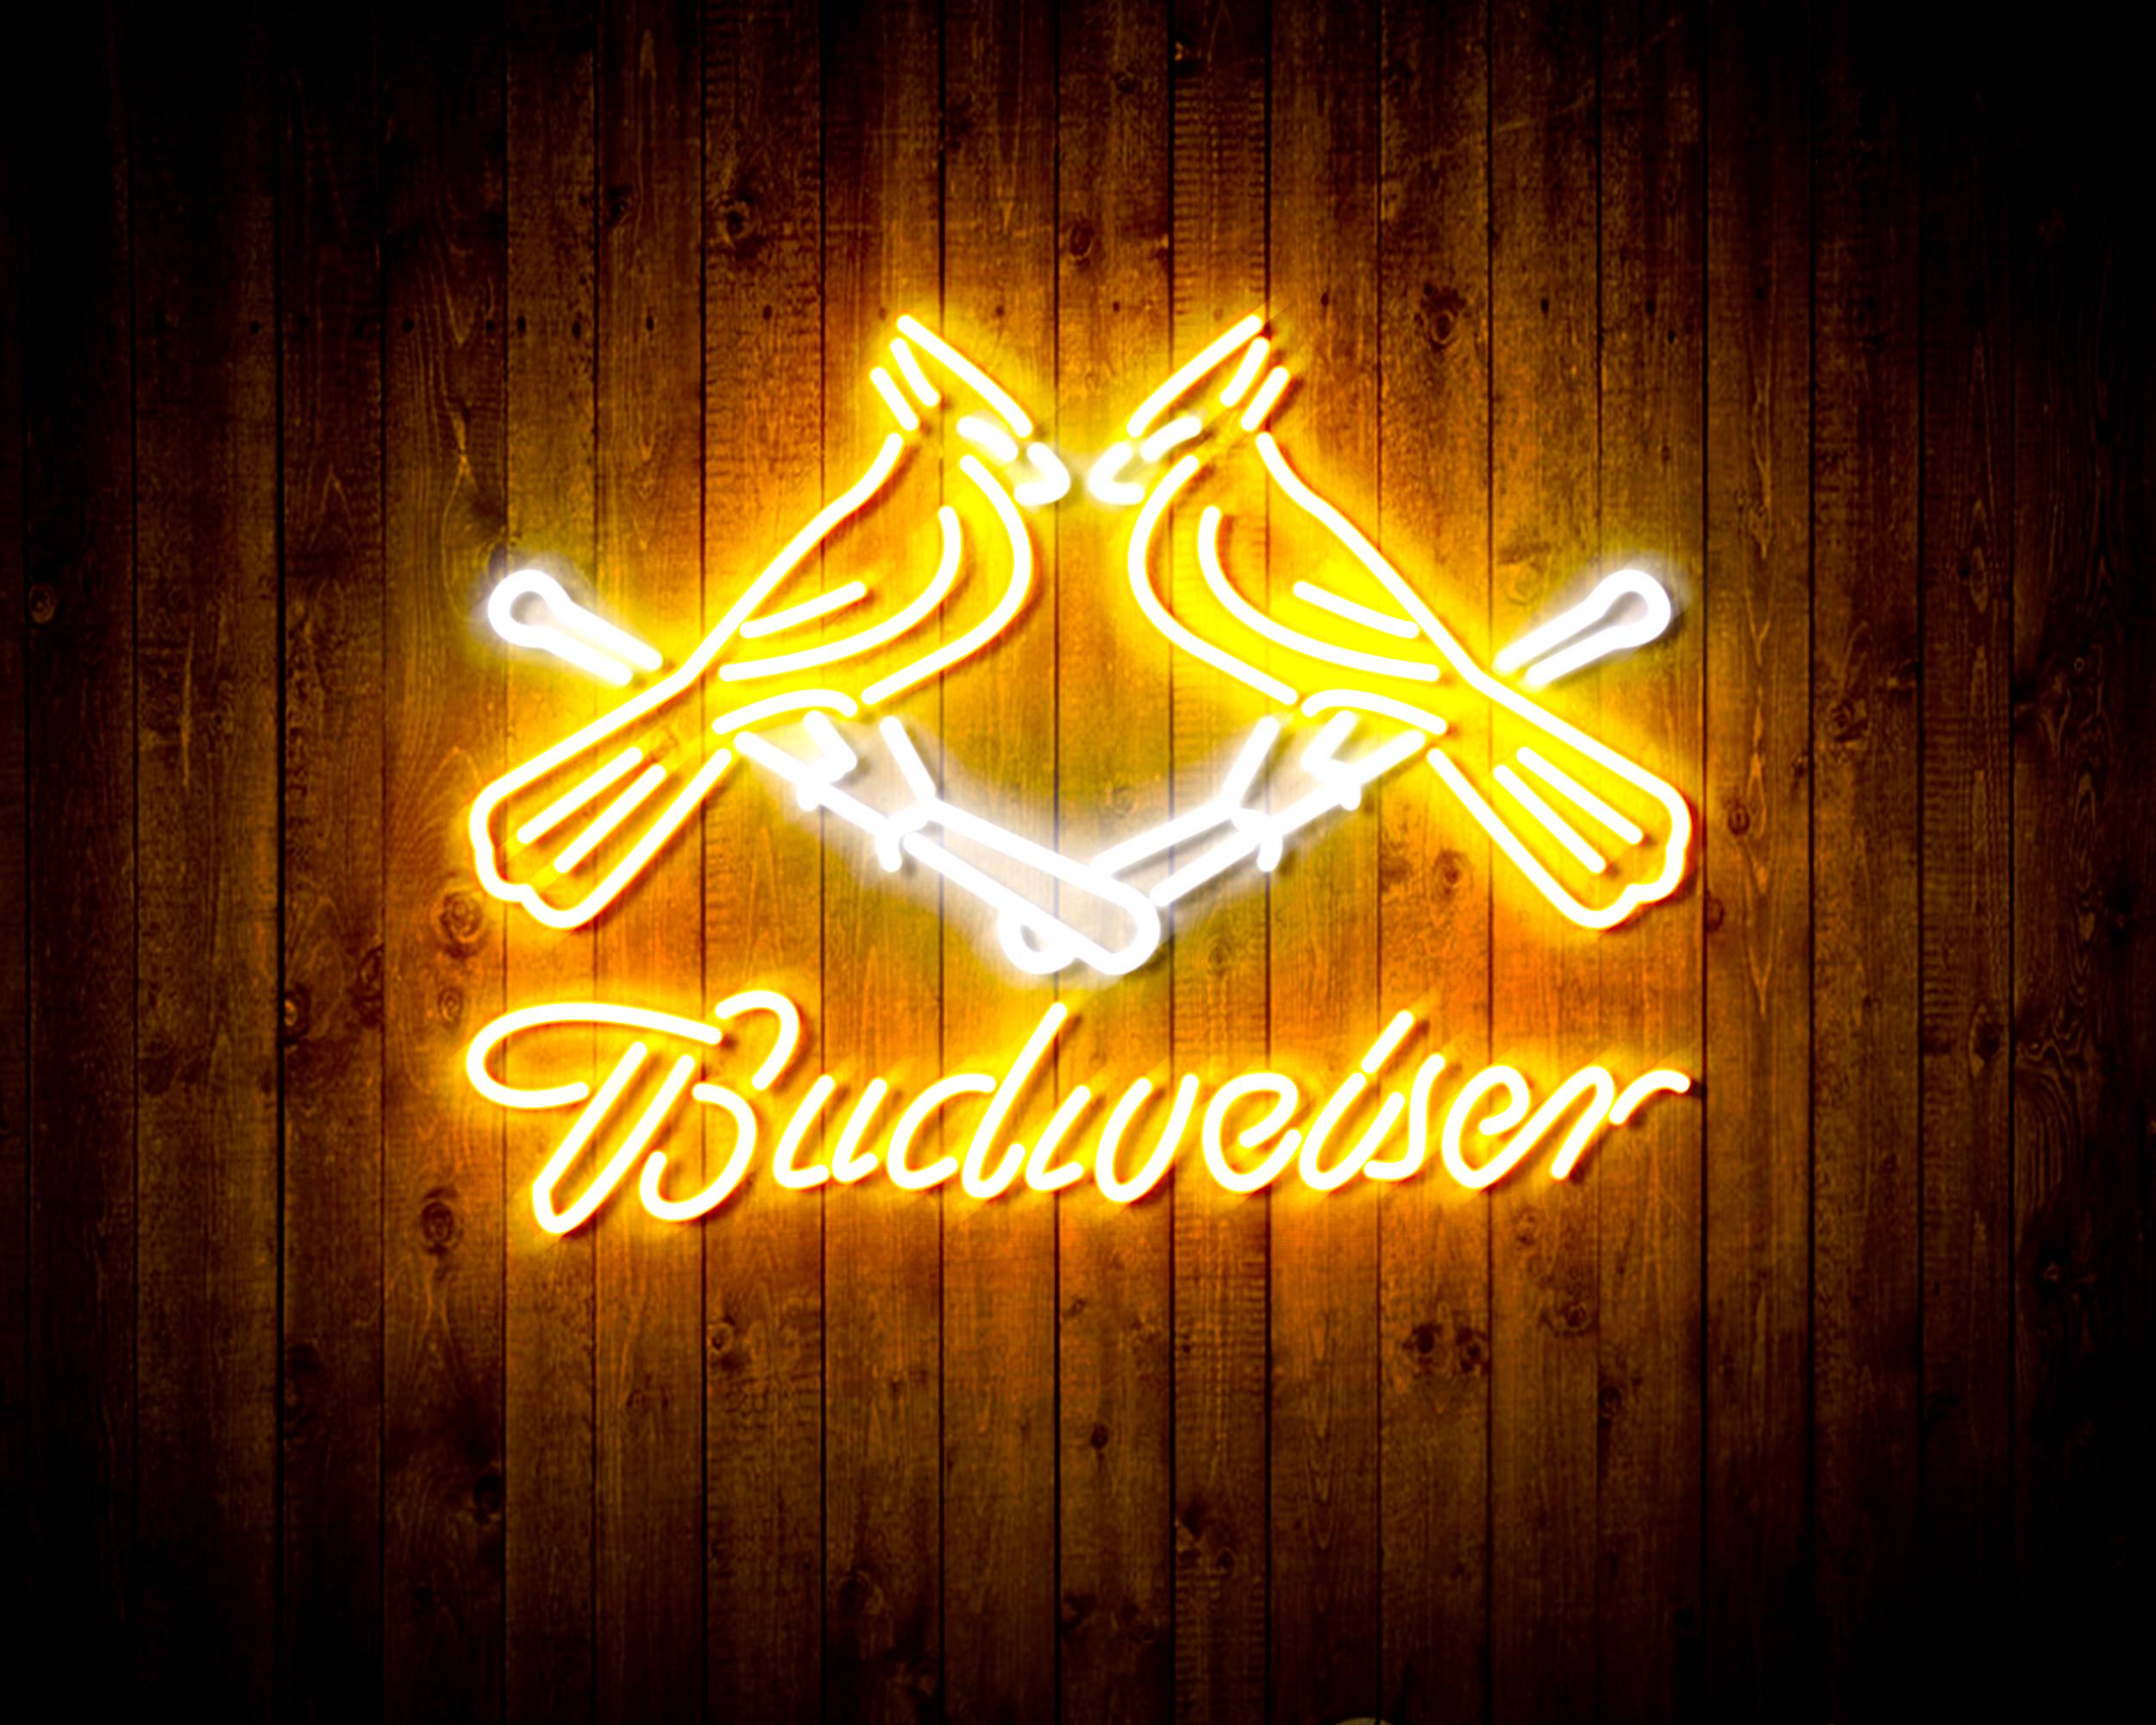 Budweiser with Cadinals Handmade LED Neon Light Sign